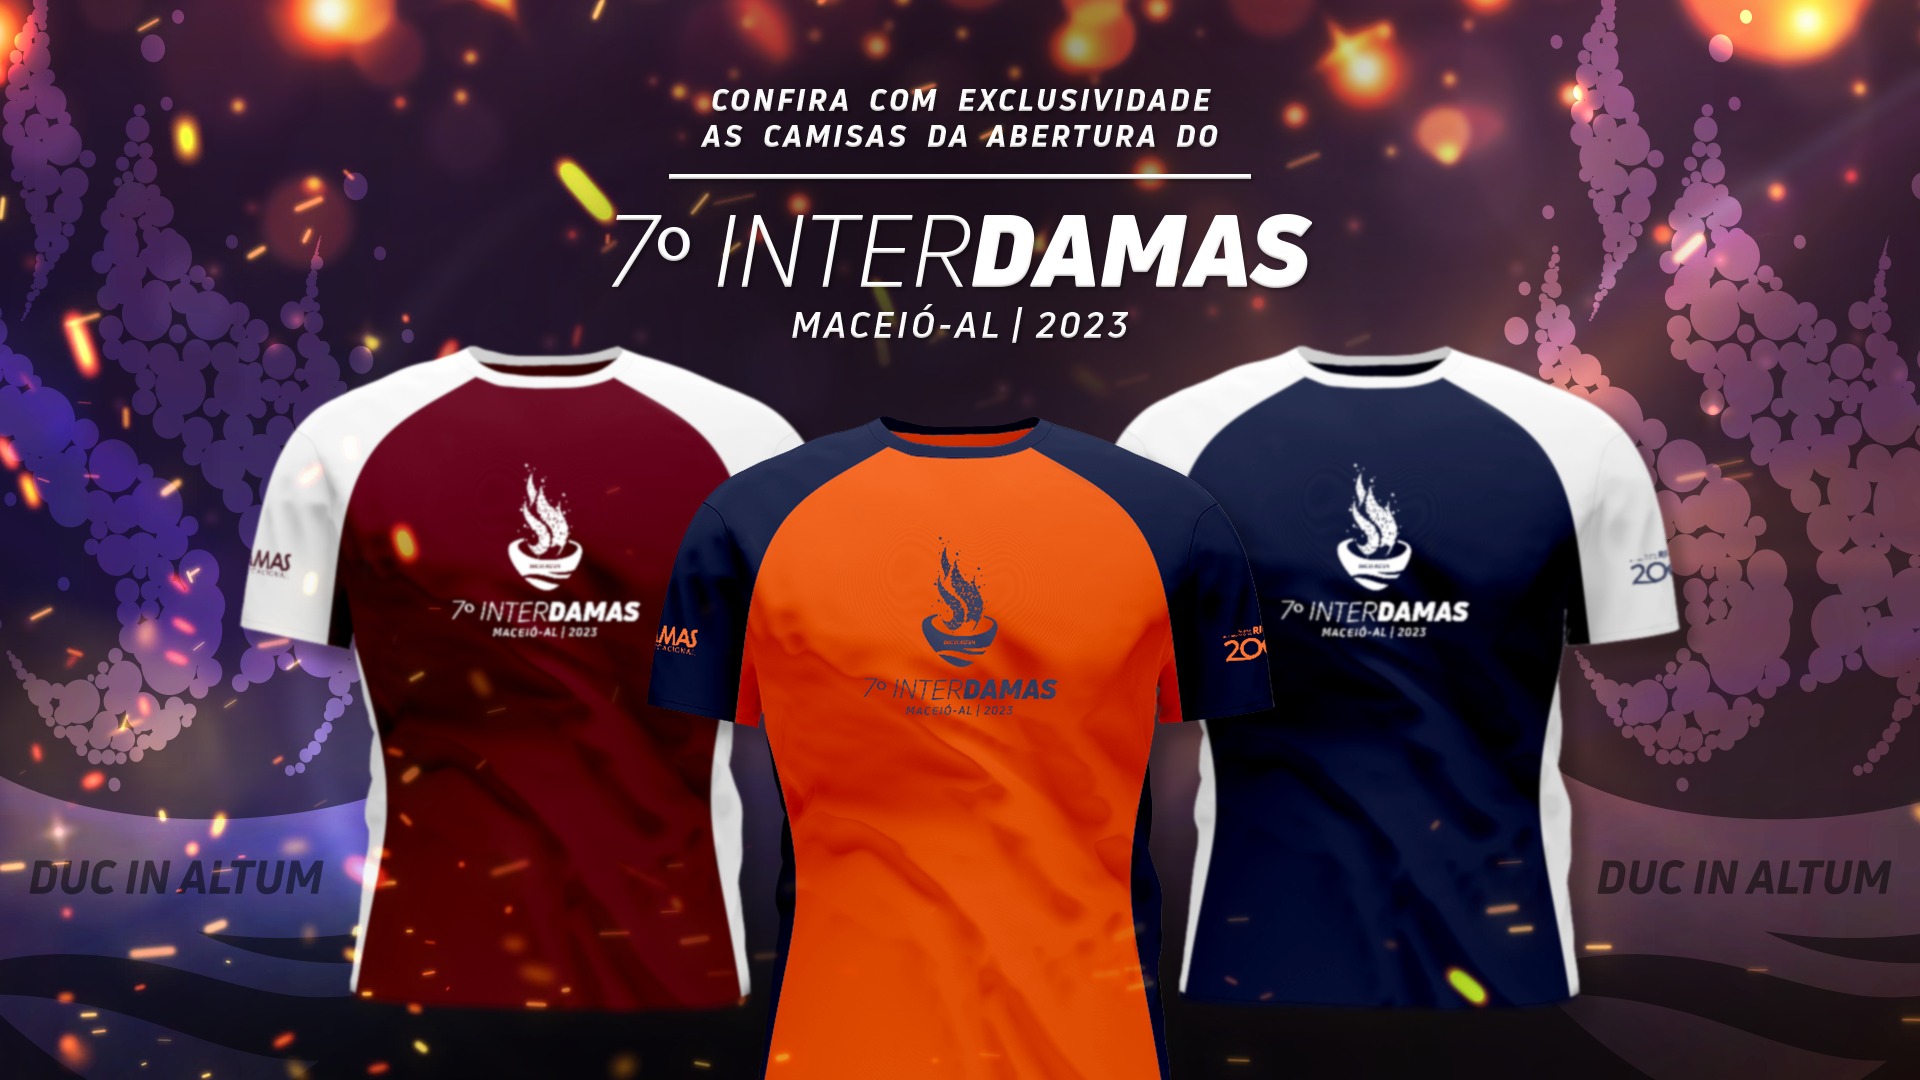 InterDamas 2023: Confira com exclusividade o modelo das camisas para a abertura do 7º InterDamas